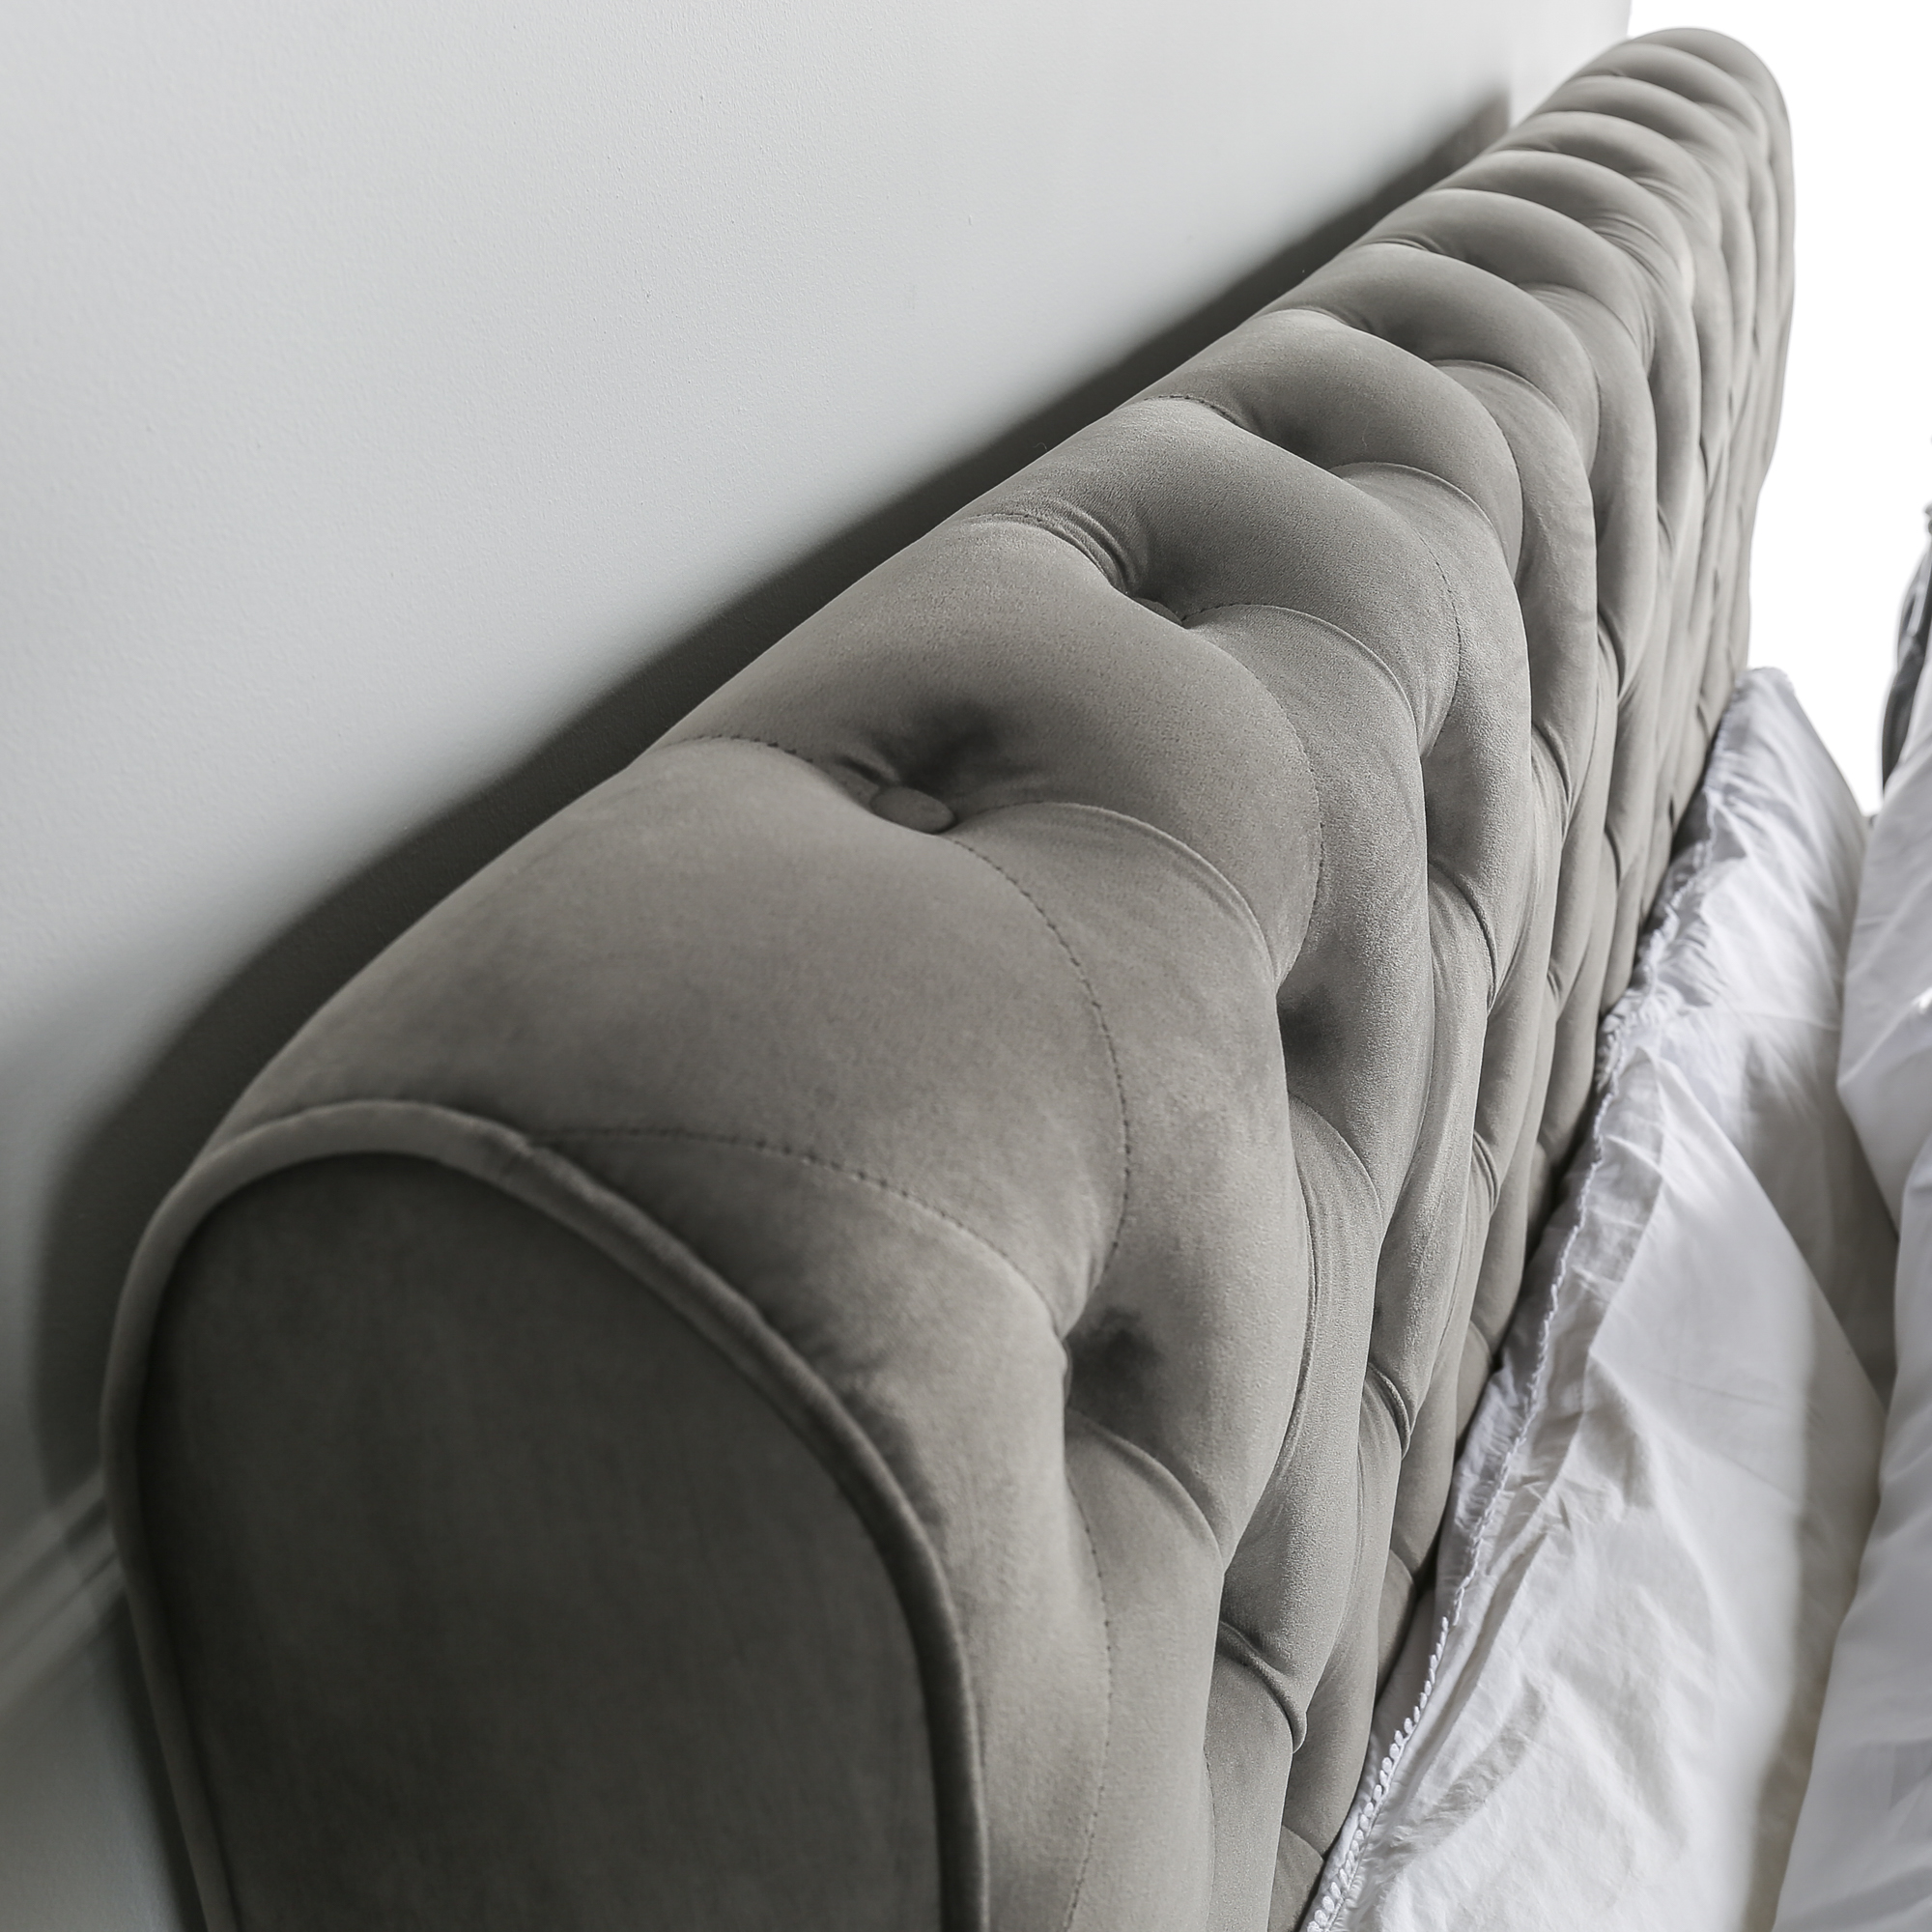 Annabelle Luxurious Grey Velvet Chesterfield King Size Bed